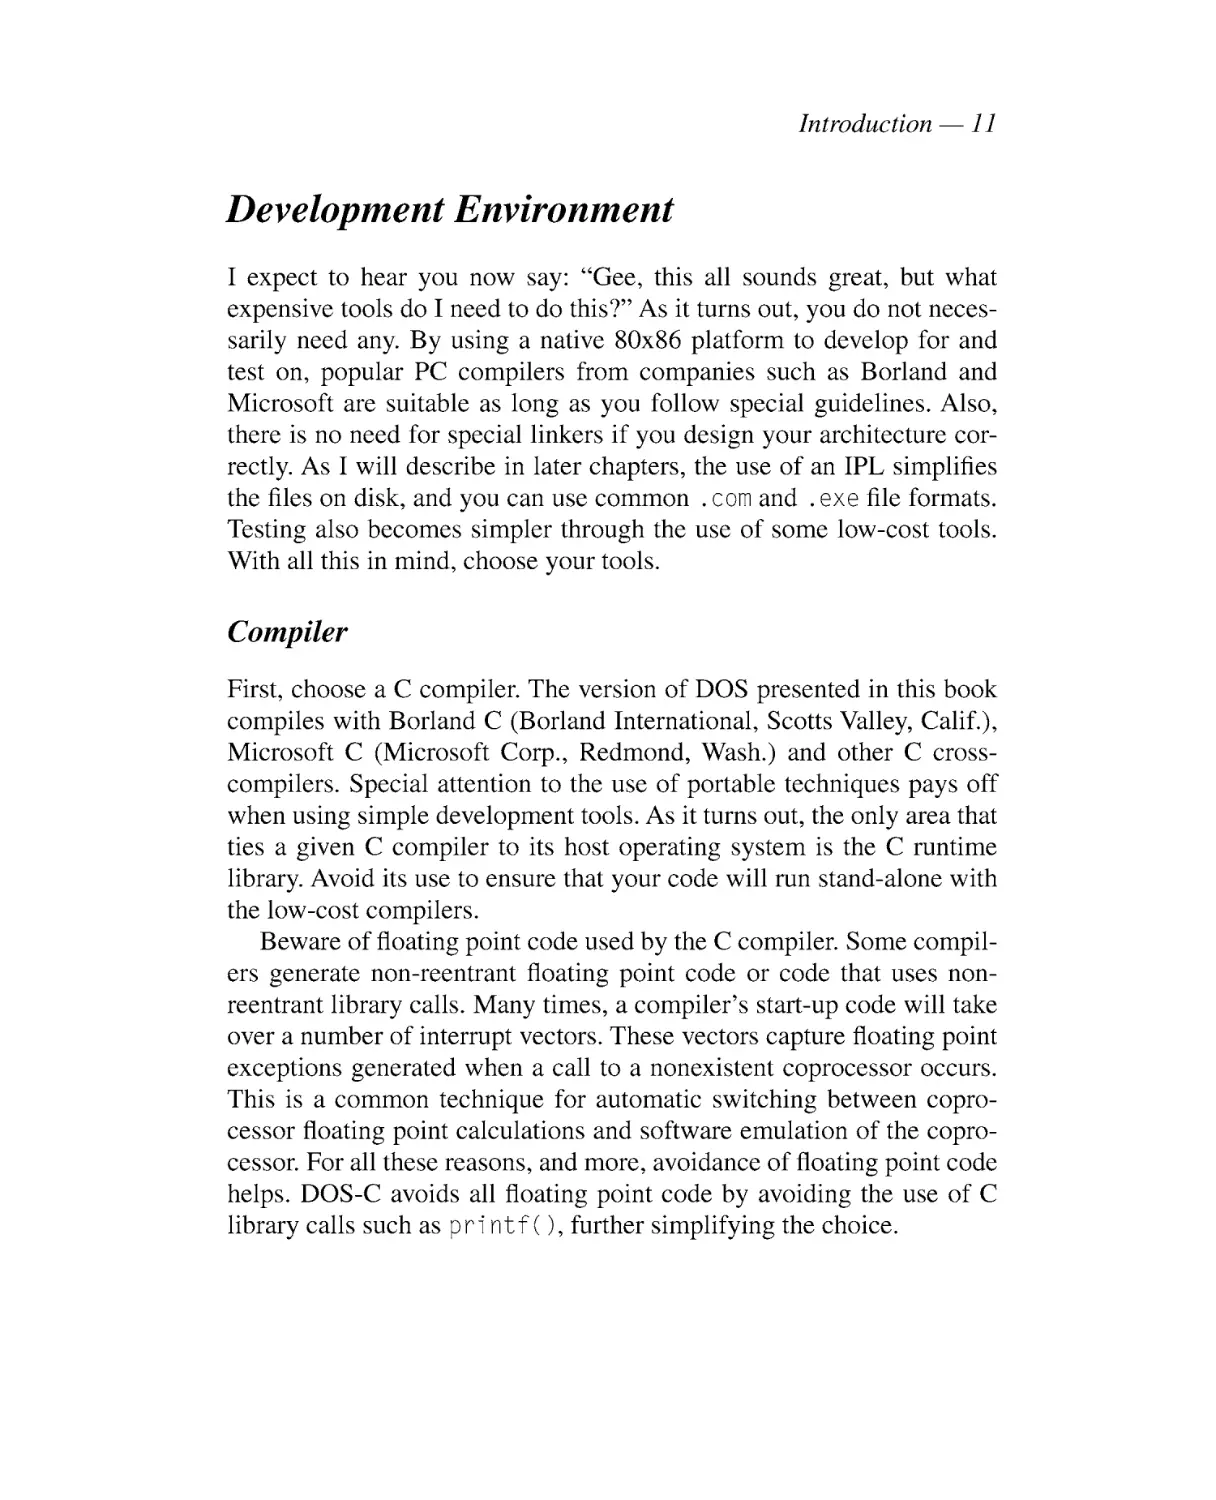 Development Environment
Compiler